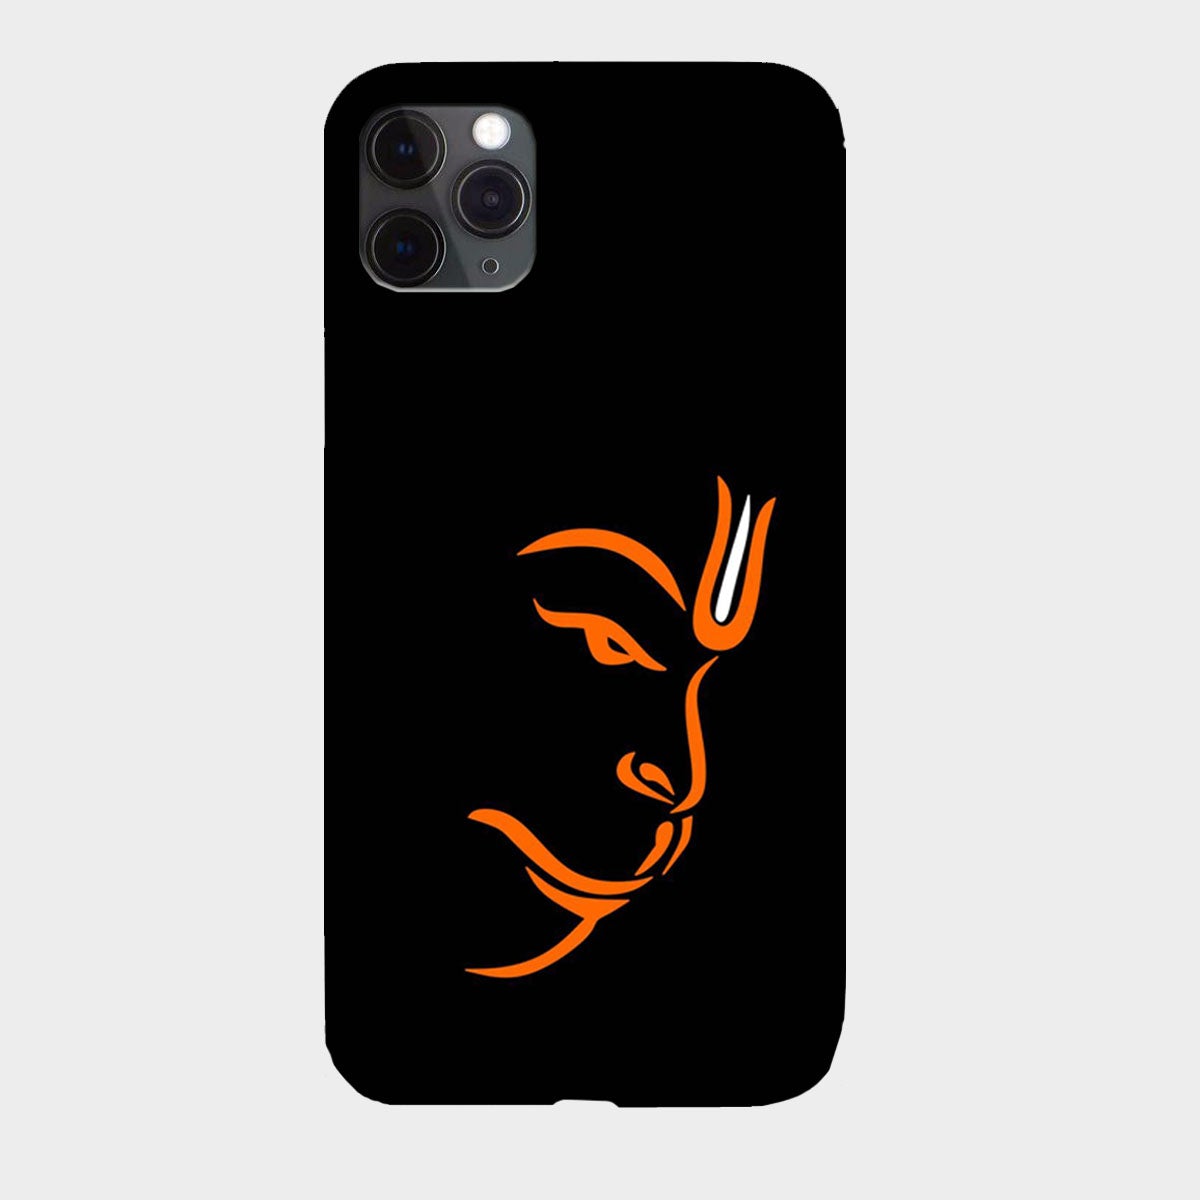 Hanuman - Mobile Phone Cover - Hard Case